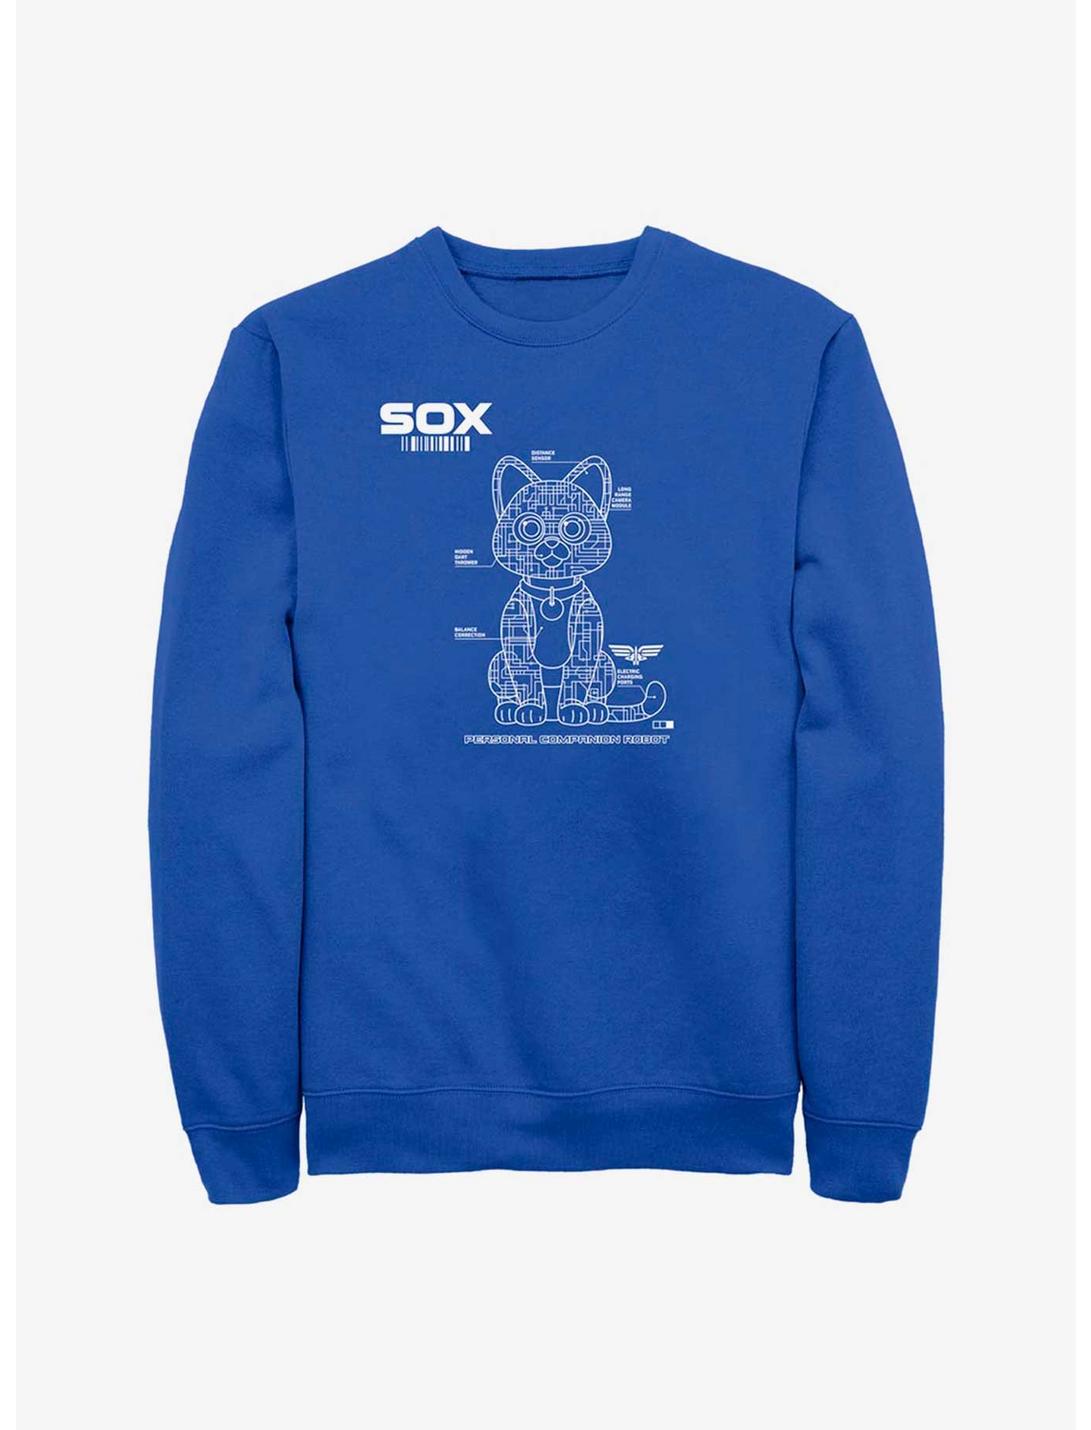 Disney Pixar Lightyear Sox Tech Sweatshirt, ROYAL, hi-res